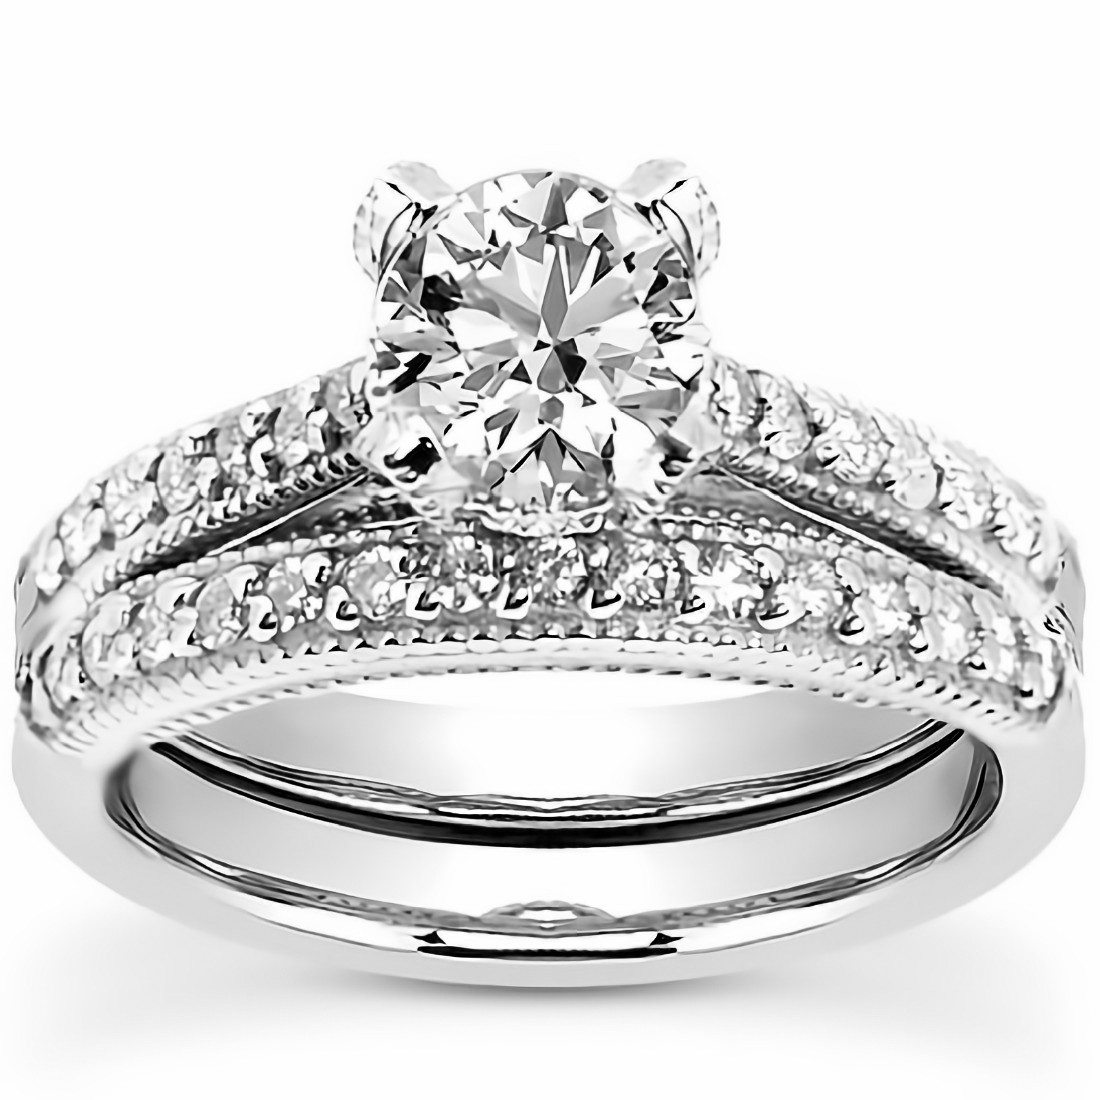 Matching Engagement Ring and Wedding Band Sets